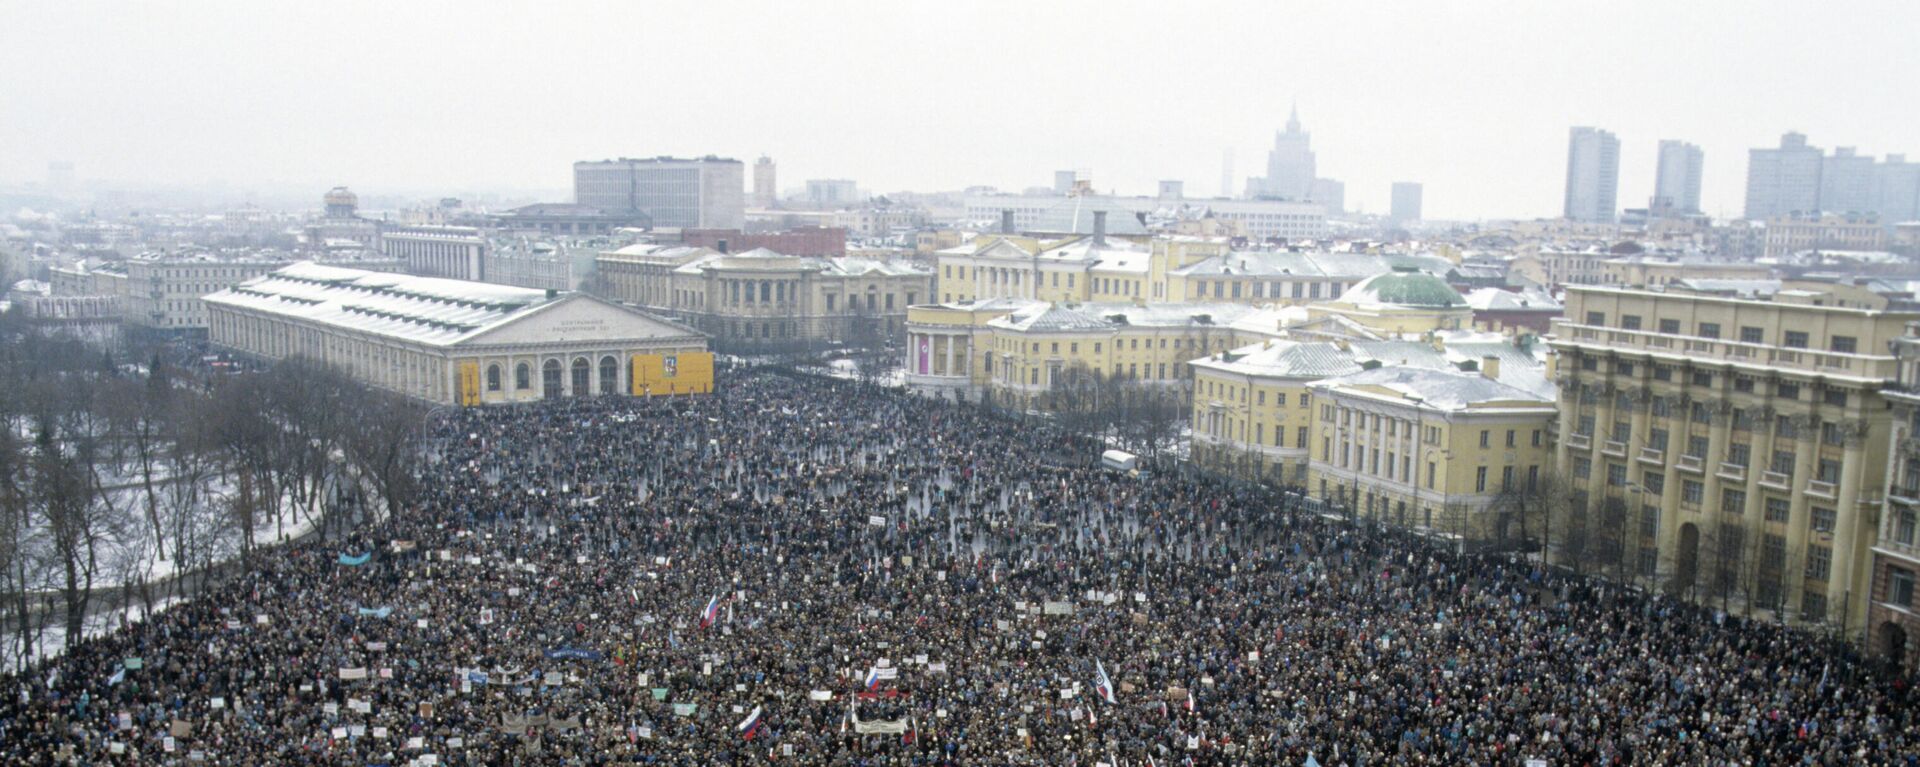 Arhivska fotografija: Miting na Manježnom trgu u Moskvi 13. januara 1991. - Sputnik Srbija, 1920, 05.09.2021